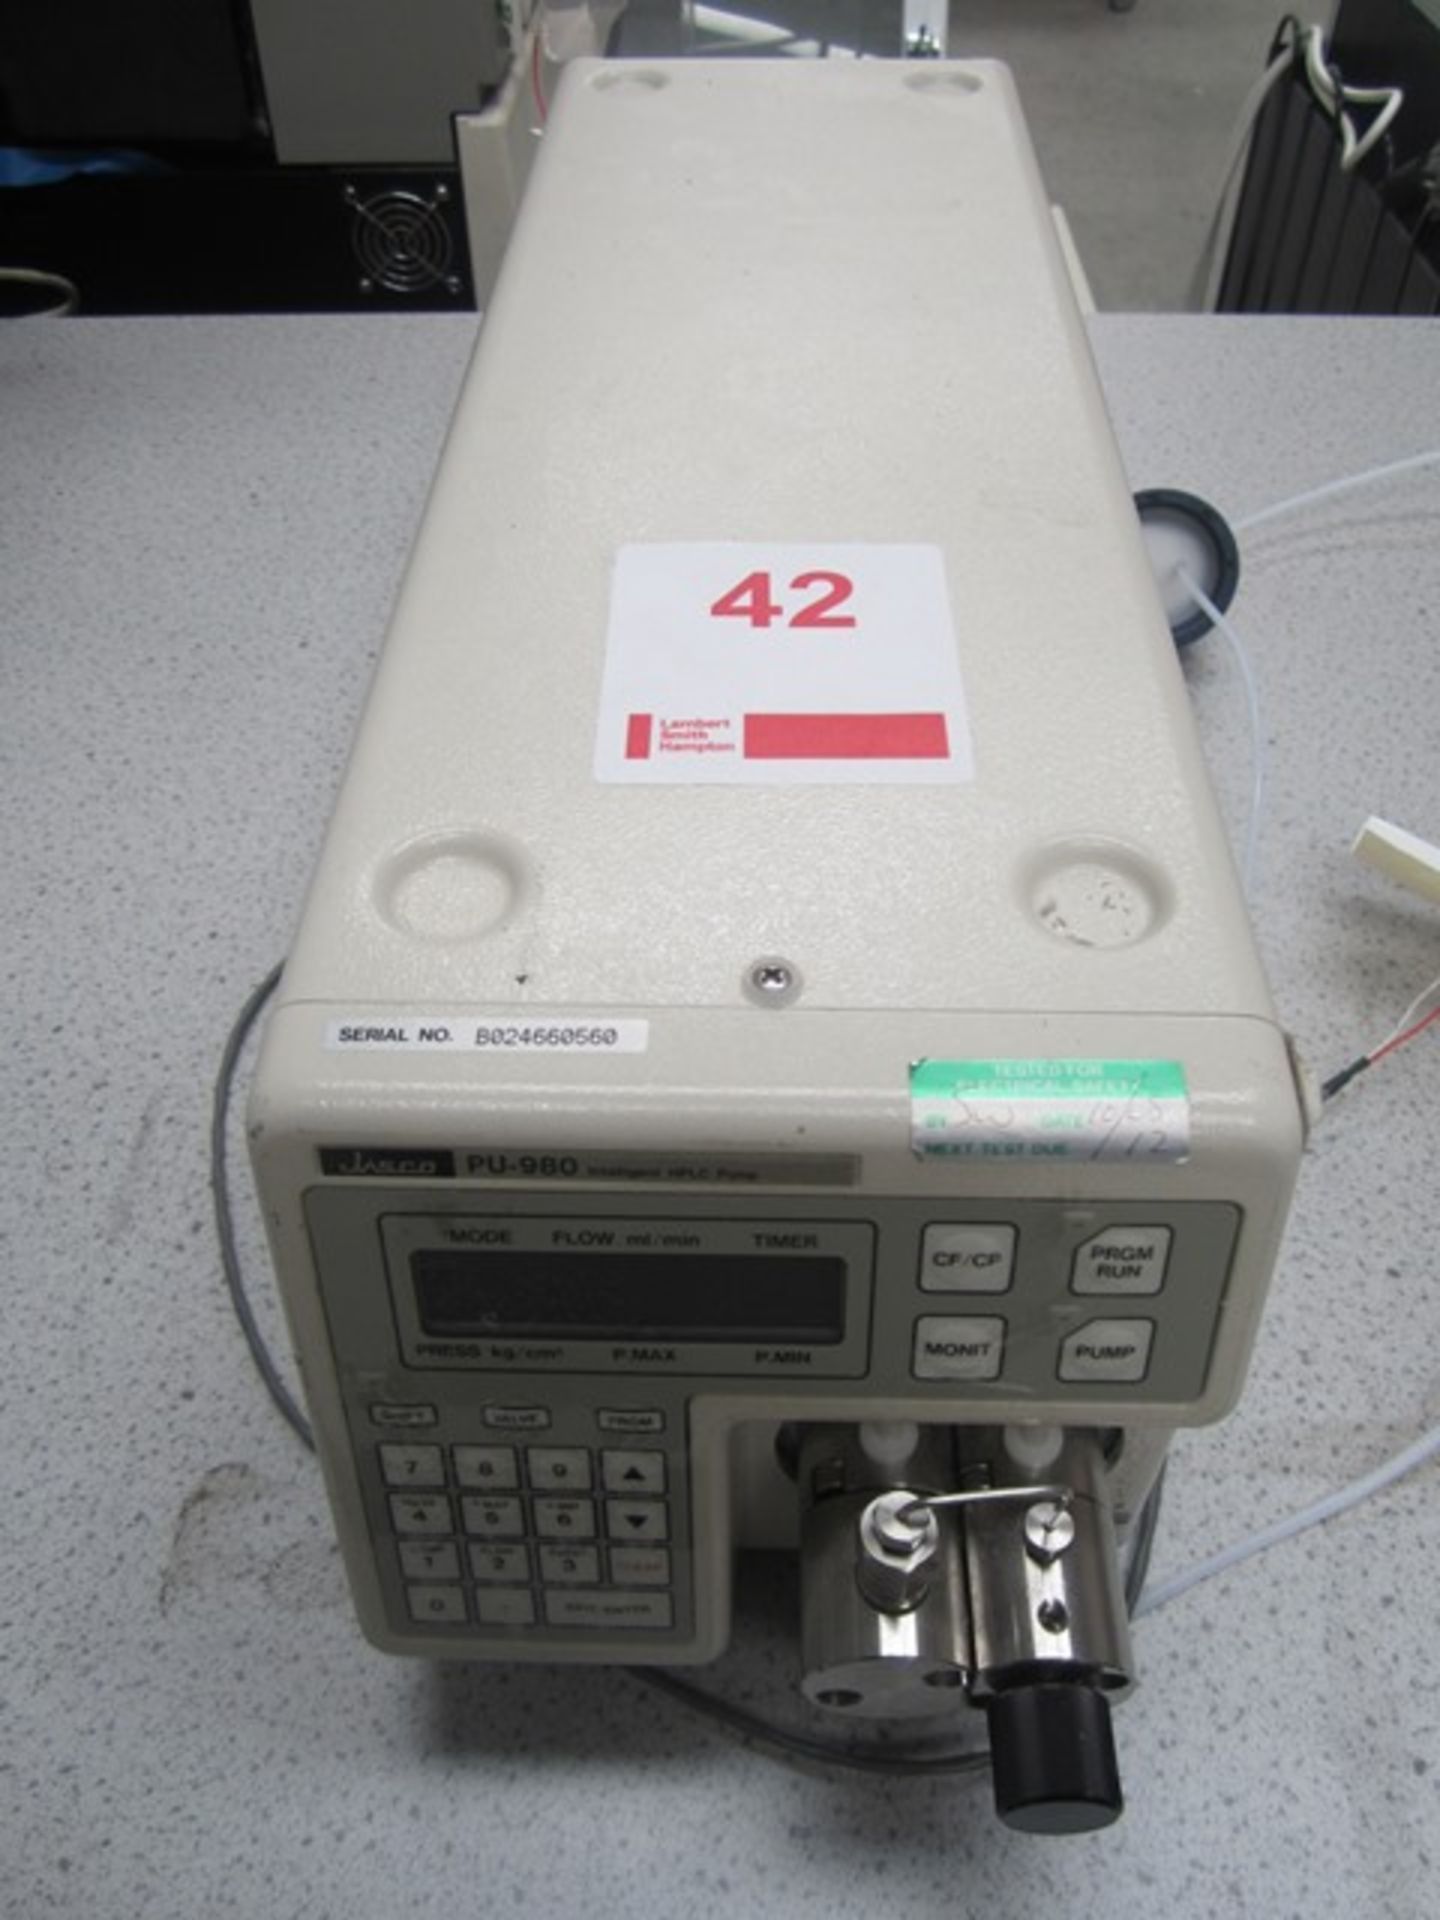 Jasco PU-980 Intelligent HPLC pump, serial number B02660560